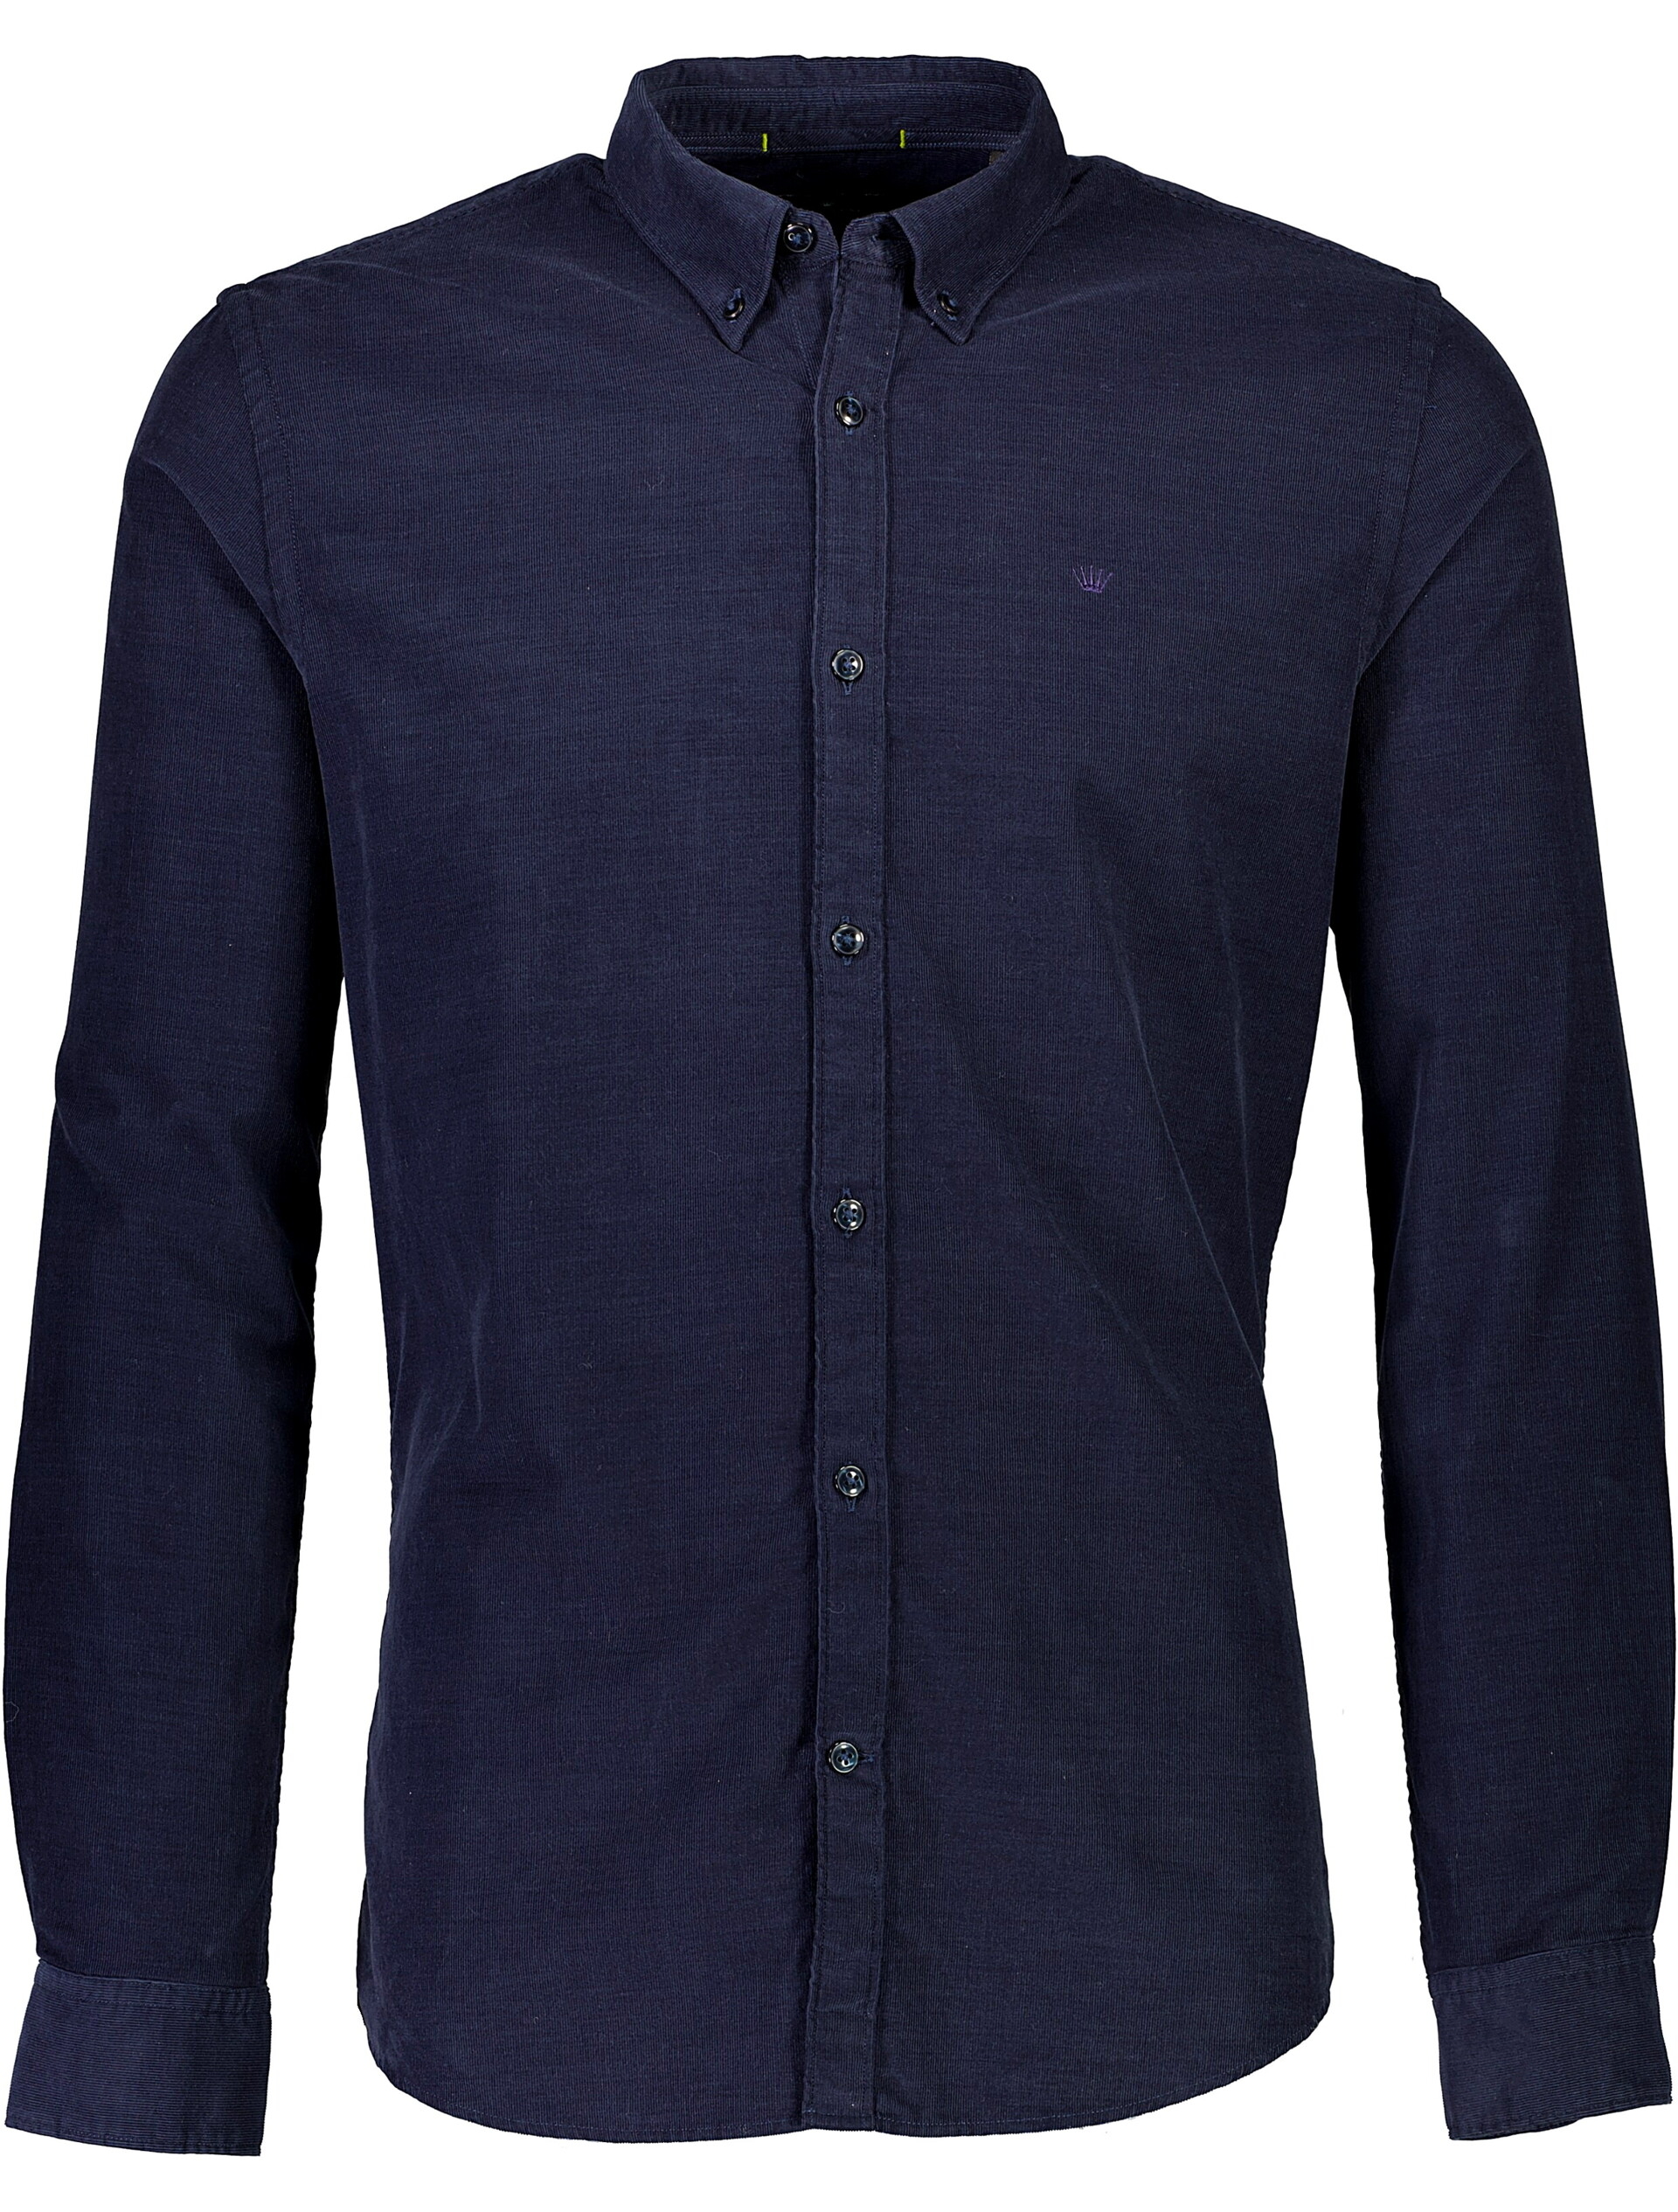 Junk de Luxe Corduroy shirt blue / navy